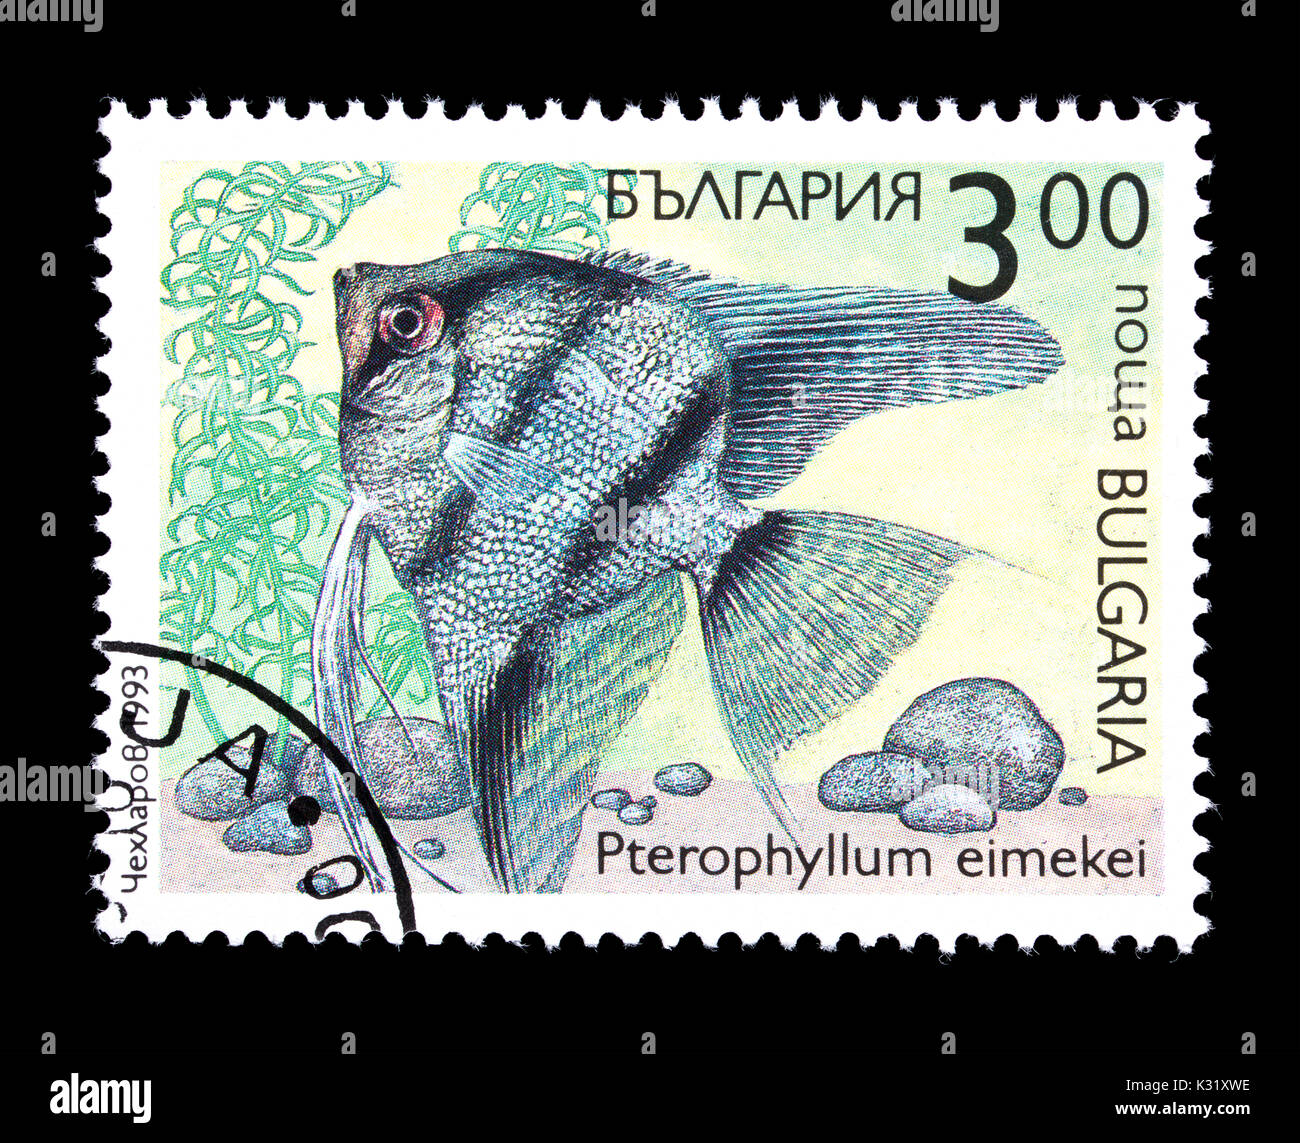 Postage stamp from Bulgaria depicting an angelfish (Pterophyllum eimekei) Stock Photo